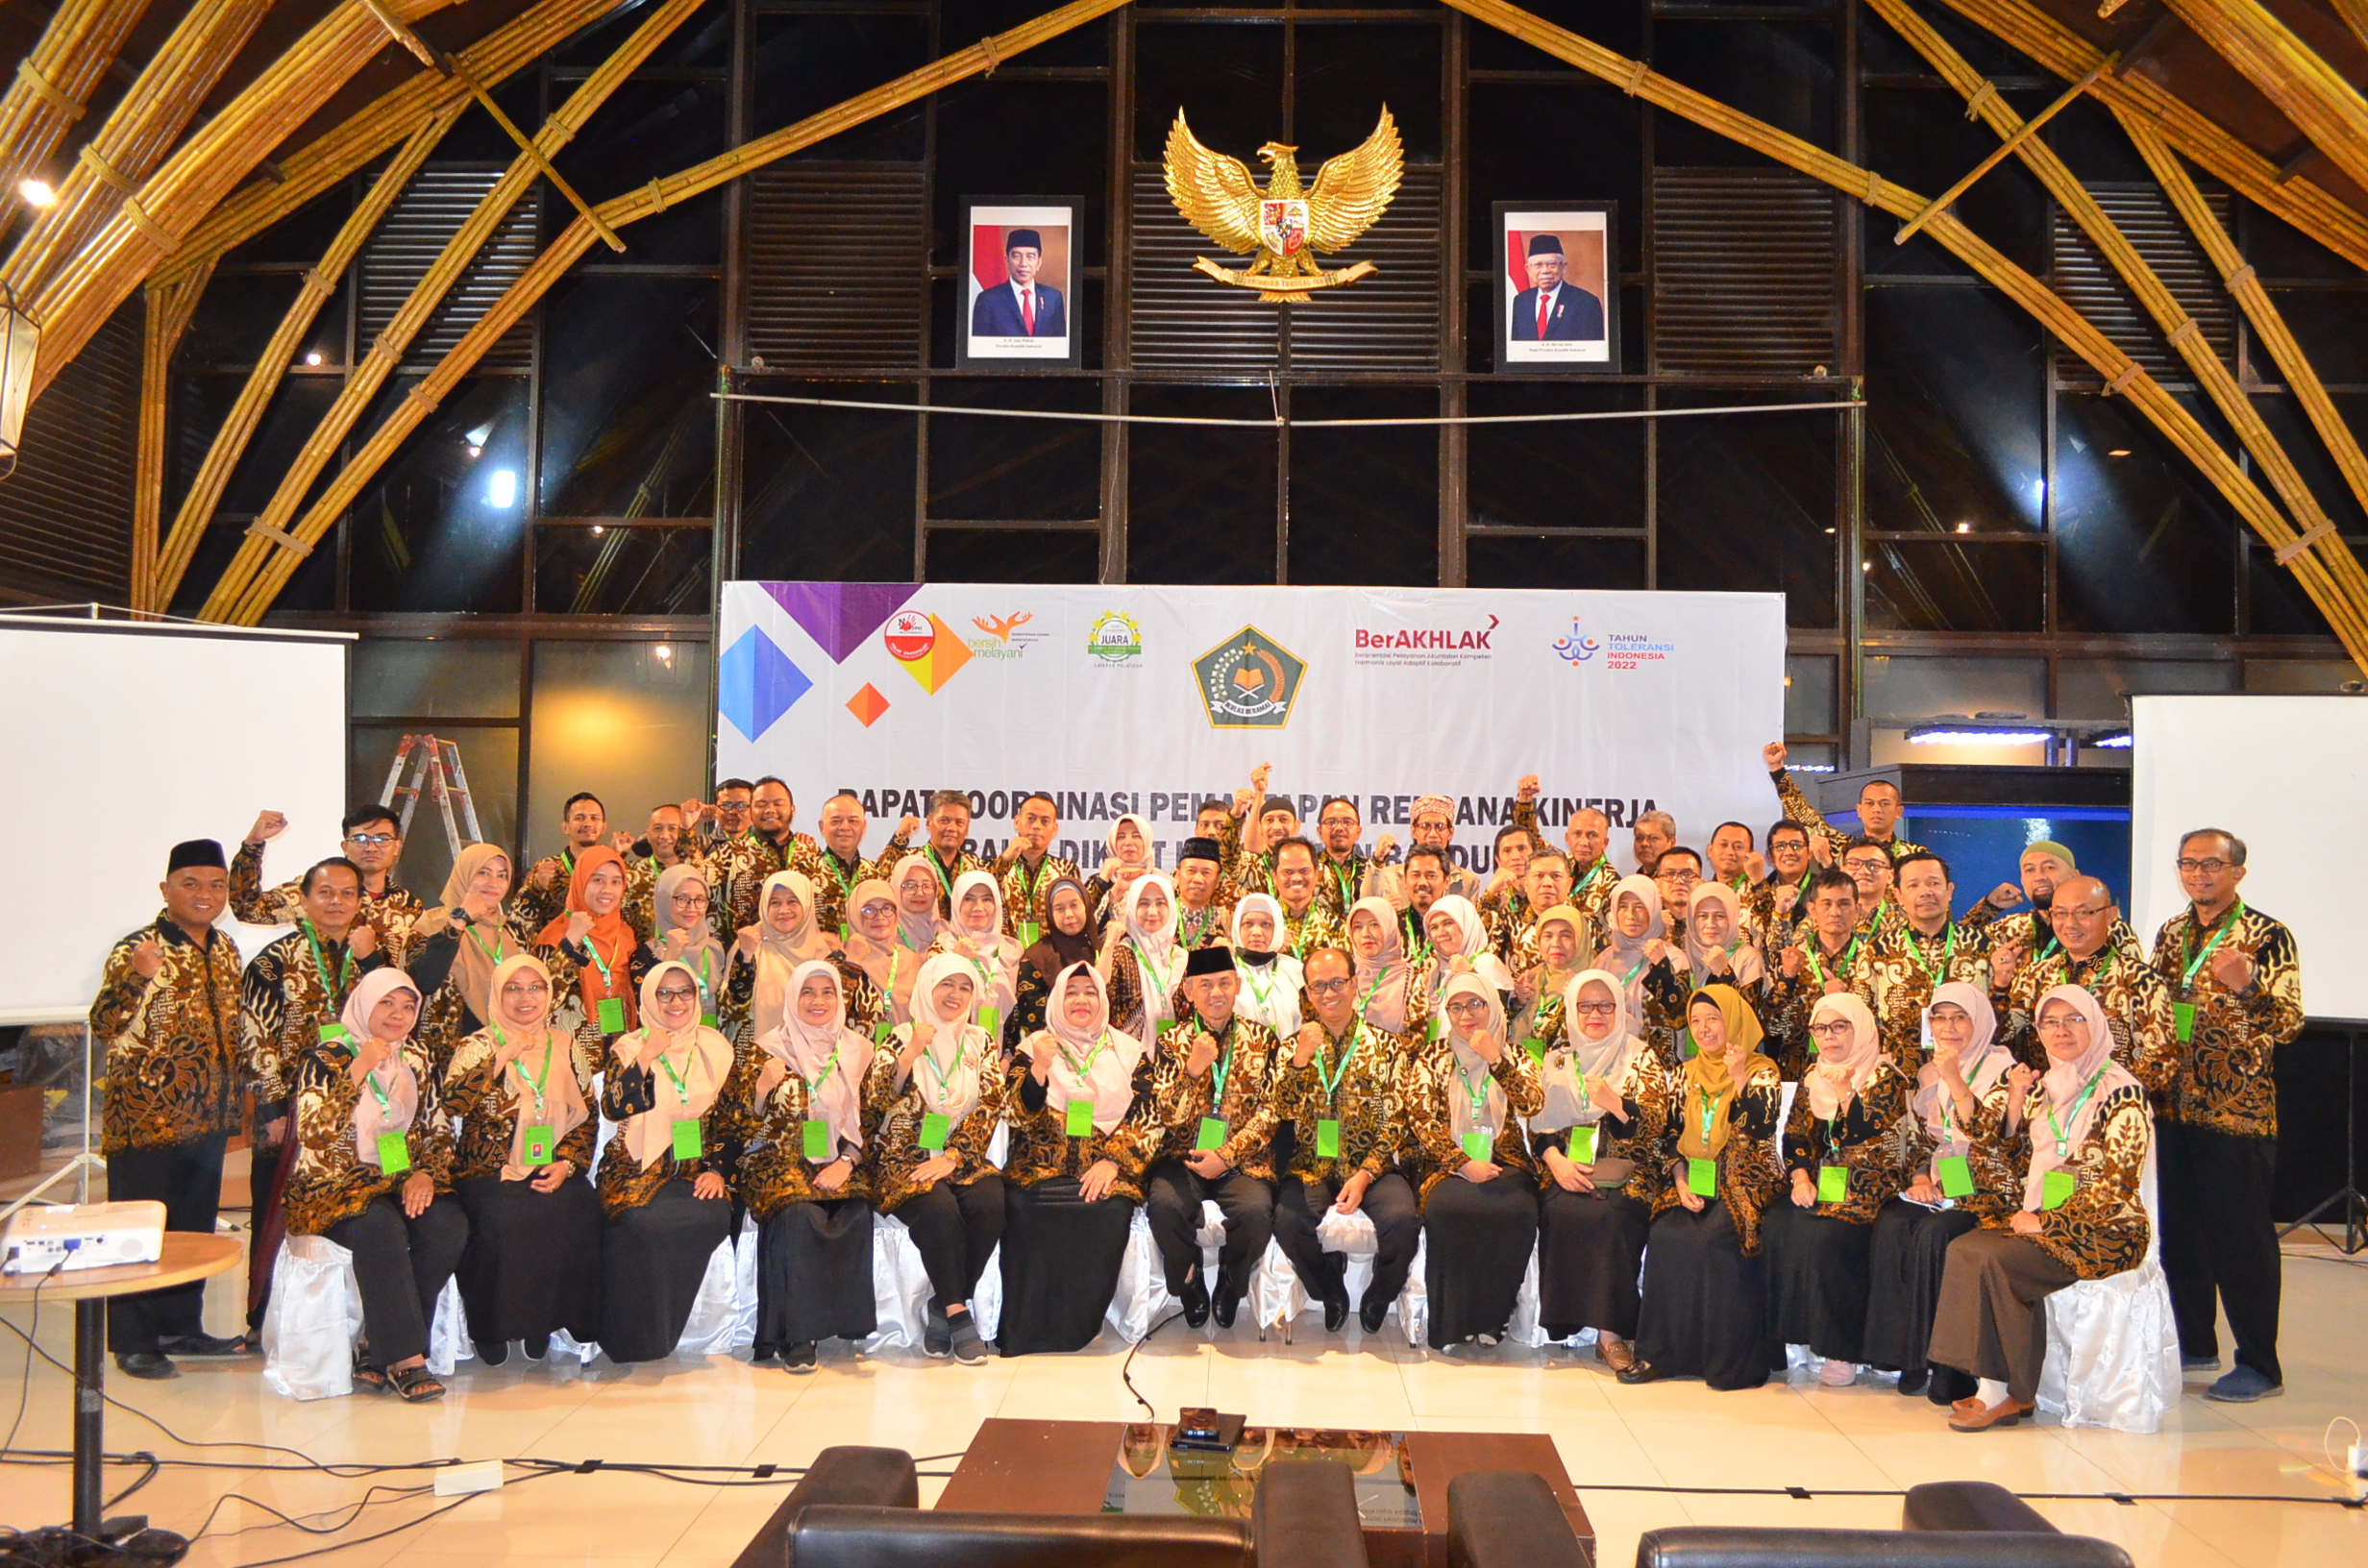 BDK Bandung Siap Berjama'ah dalam Layanan Pelatihan menuju ASN BerAKHLAK dan Bermartabat